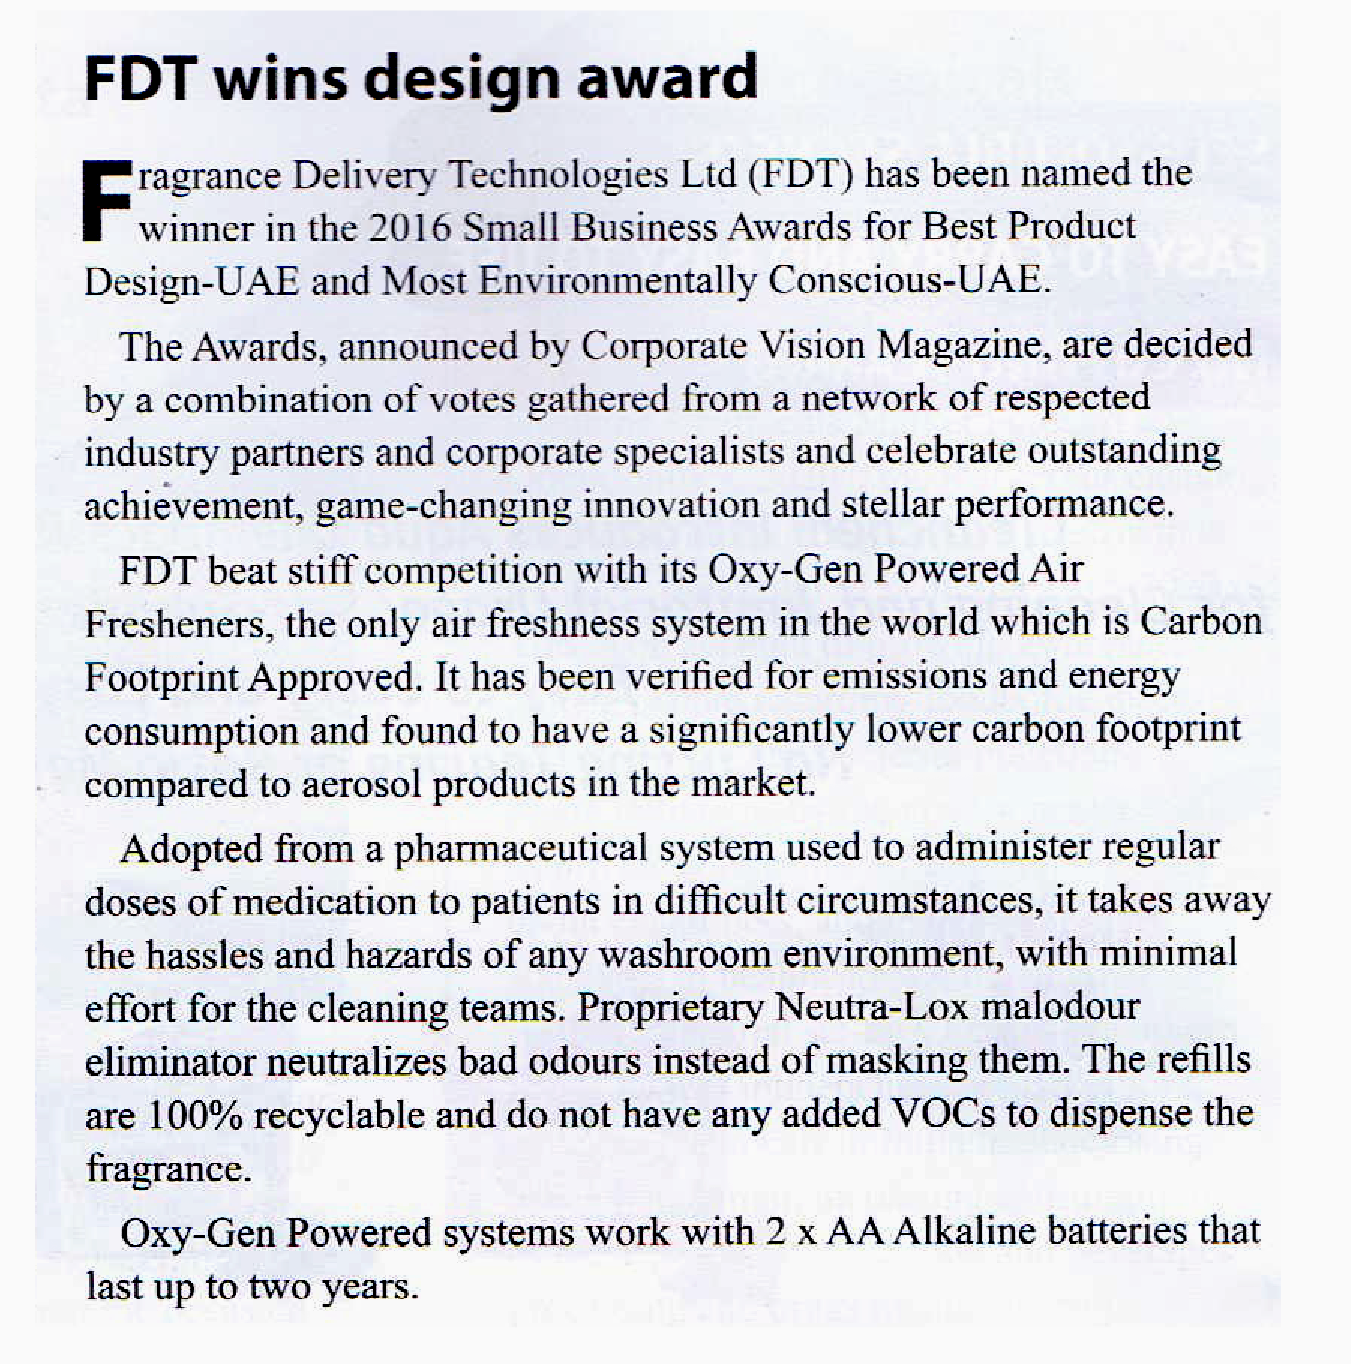 FDT wins Design Award